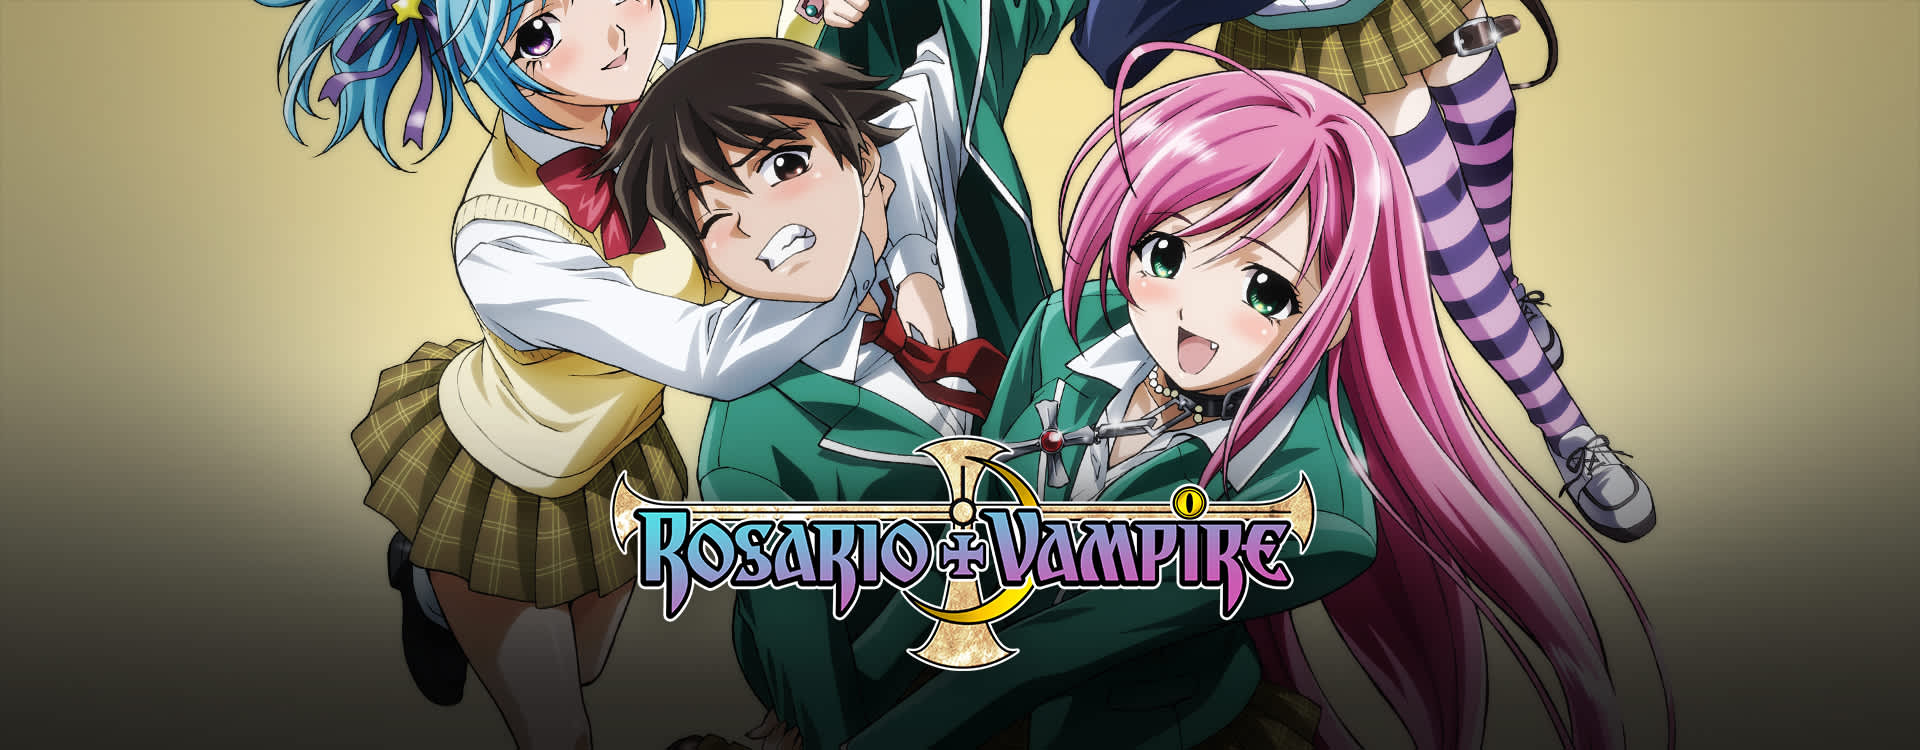 rosario vampire anime dubbed